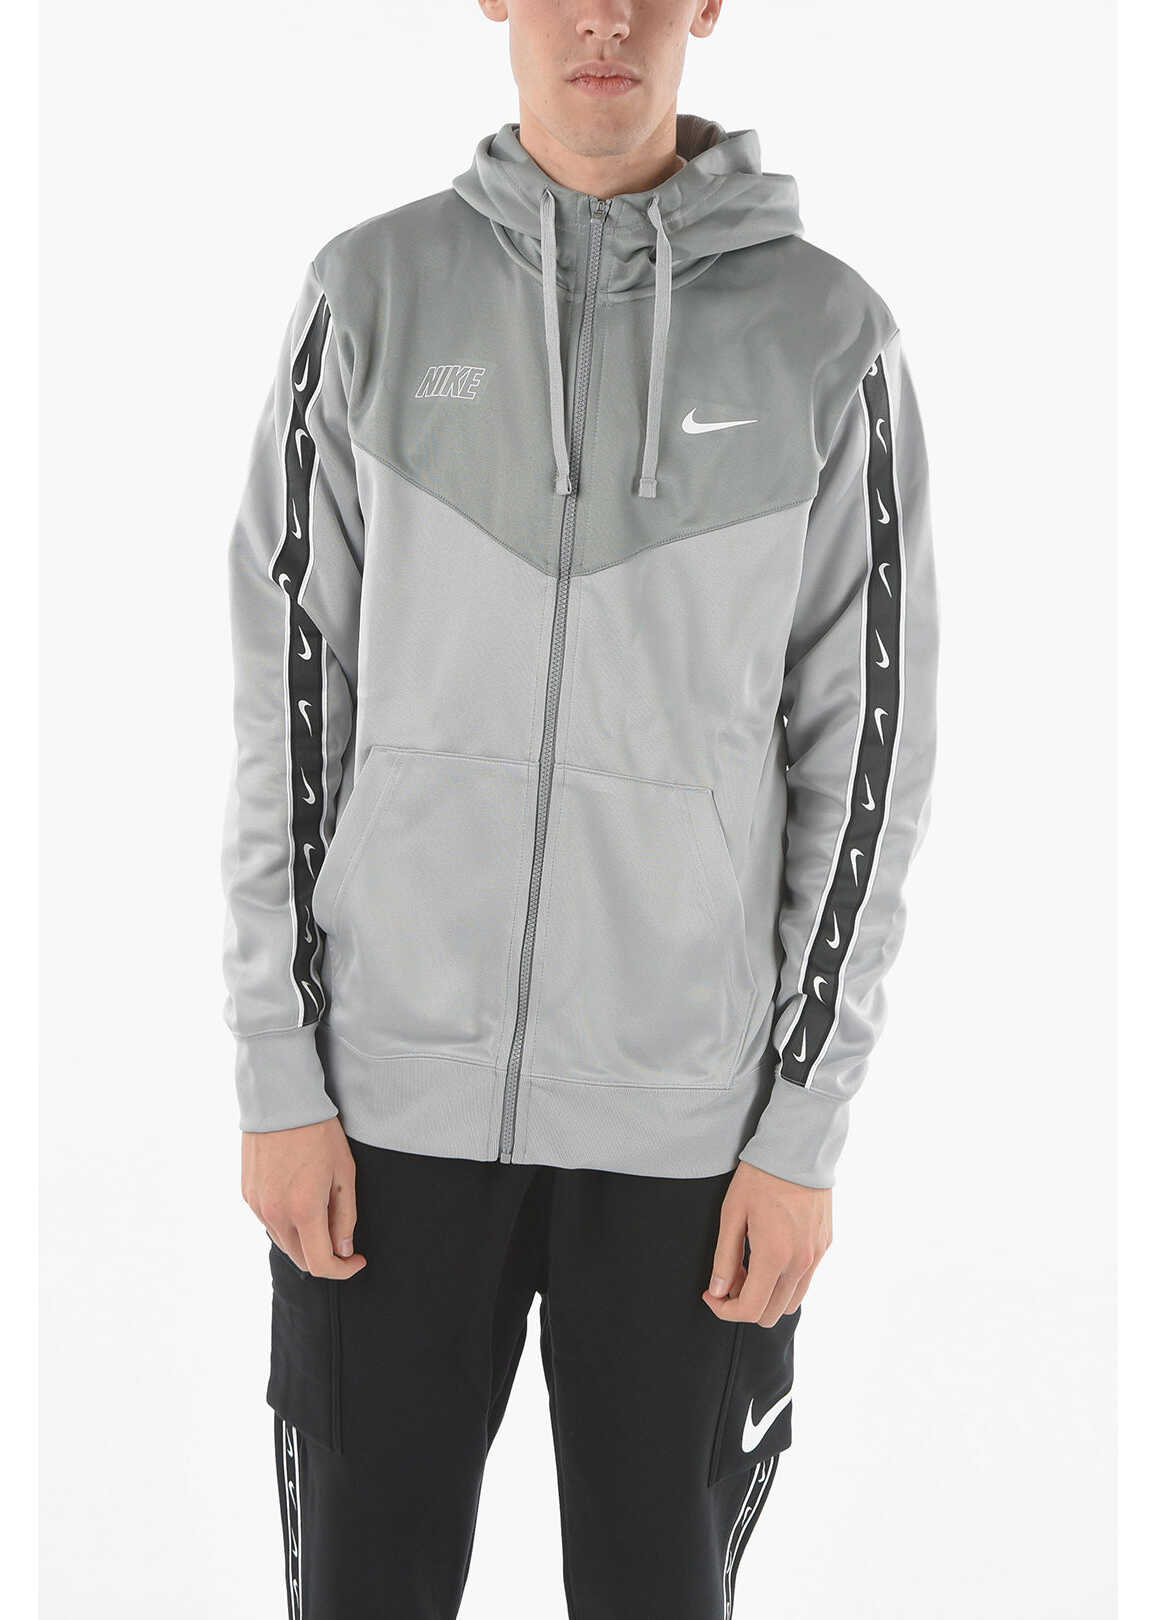 Nike Logoed Side Band Sweatshirt With Zip Closure Gray